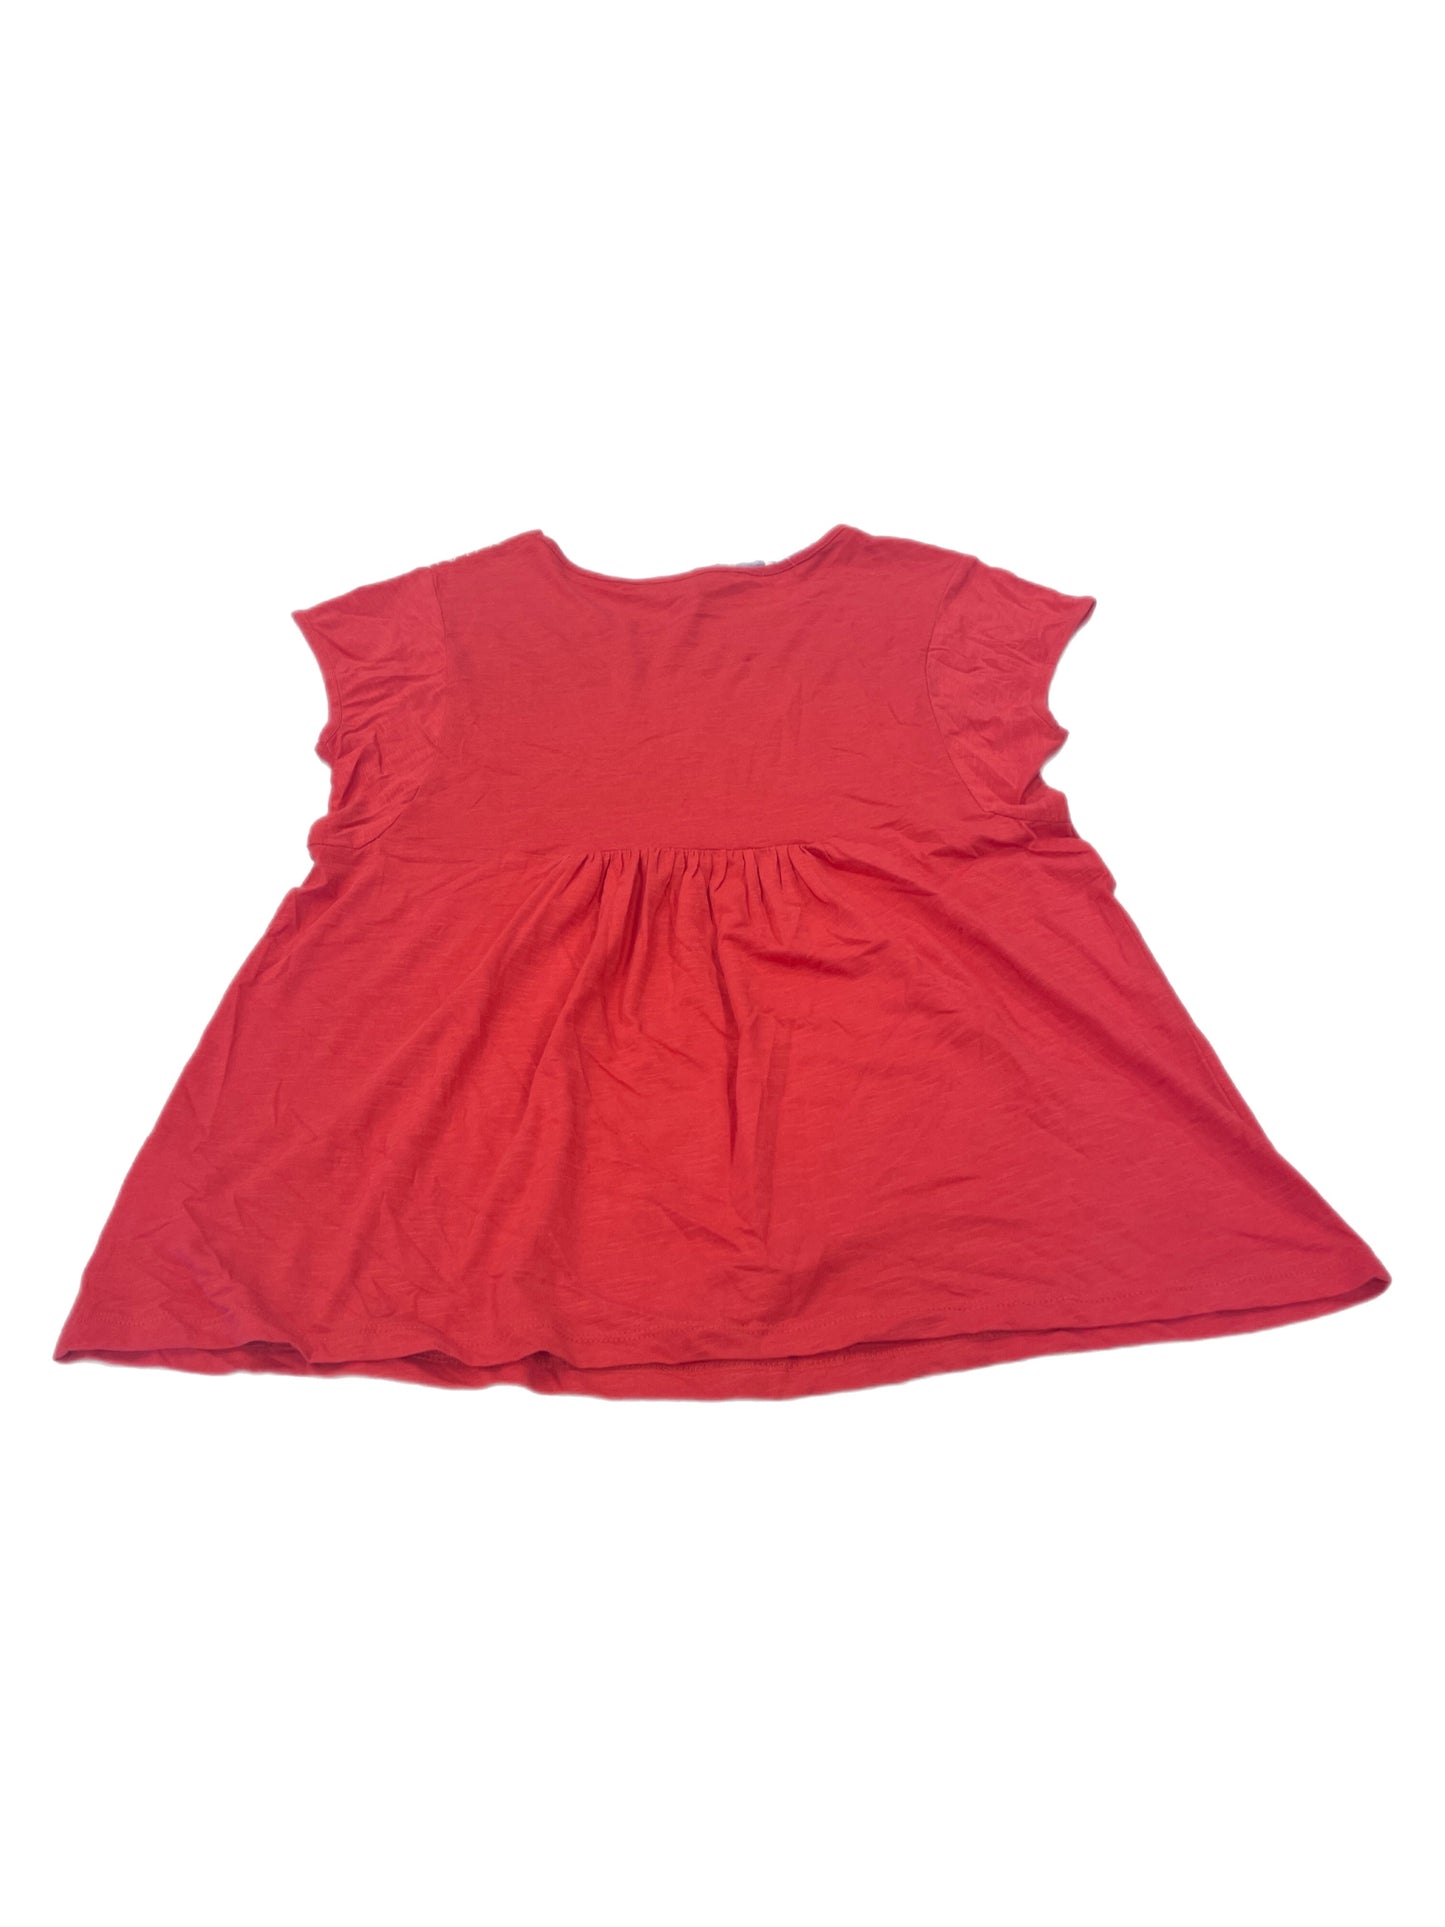 Top Short Sleeve By Gloria Vanderbilt  Size: S